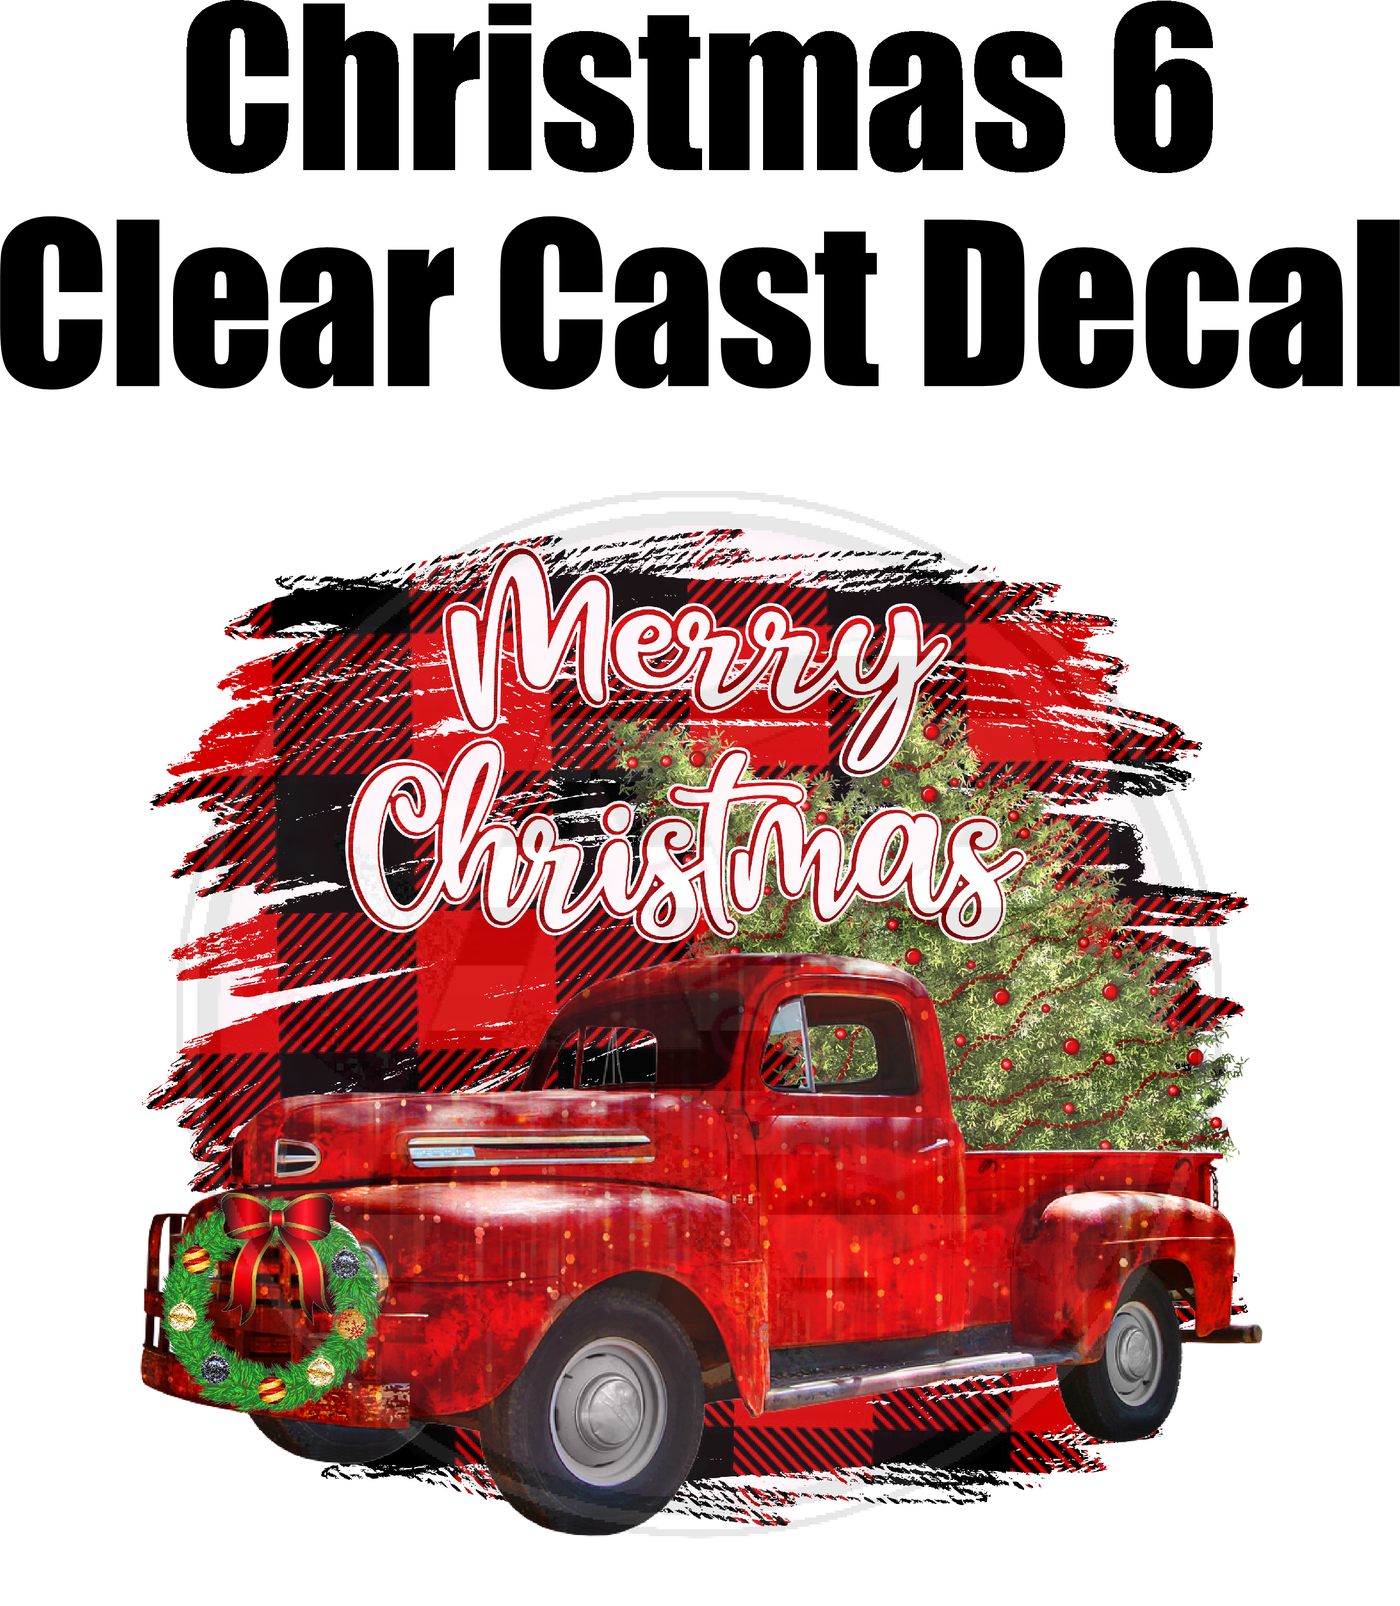 Christmas 6 - Clear Cast Decal